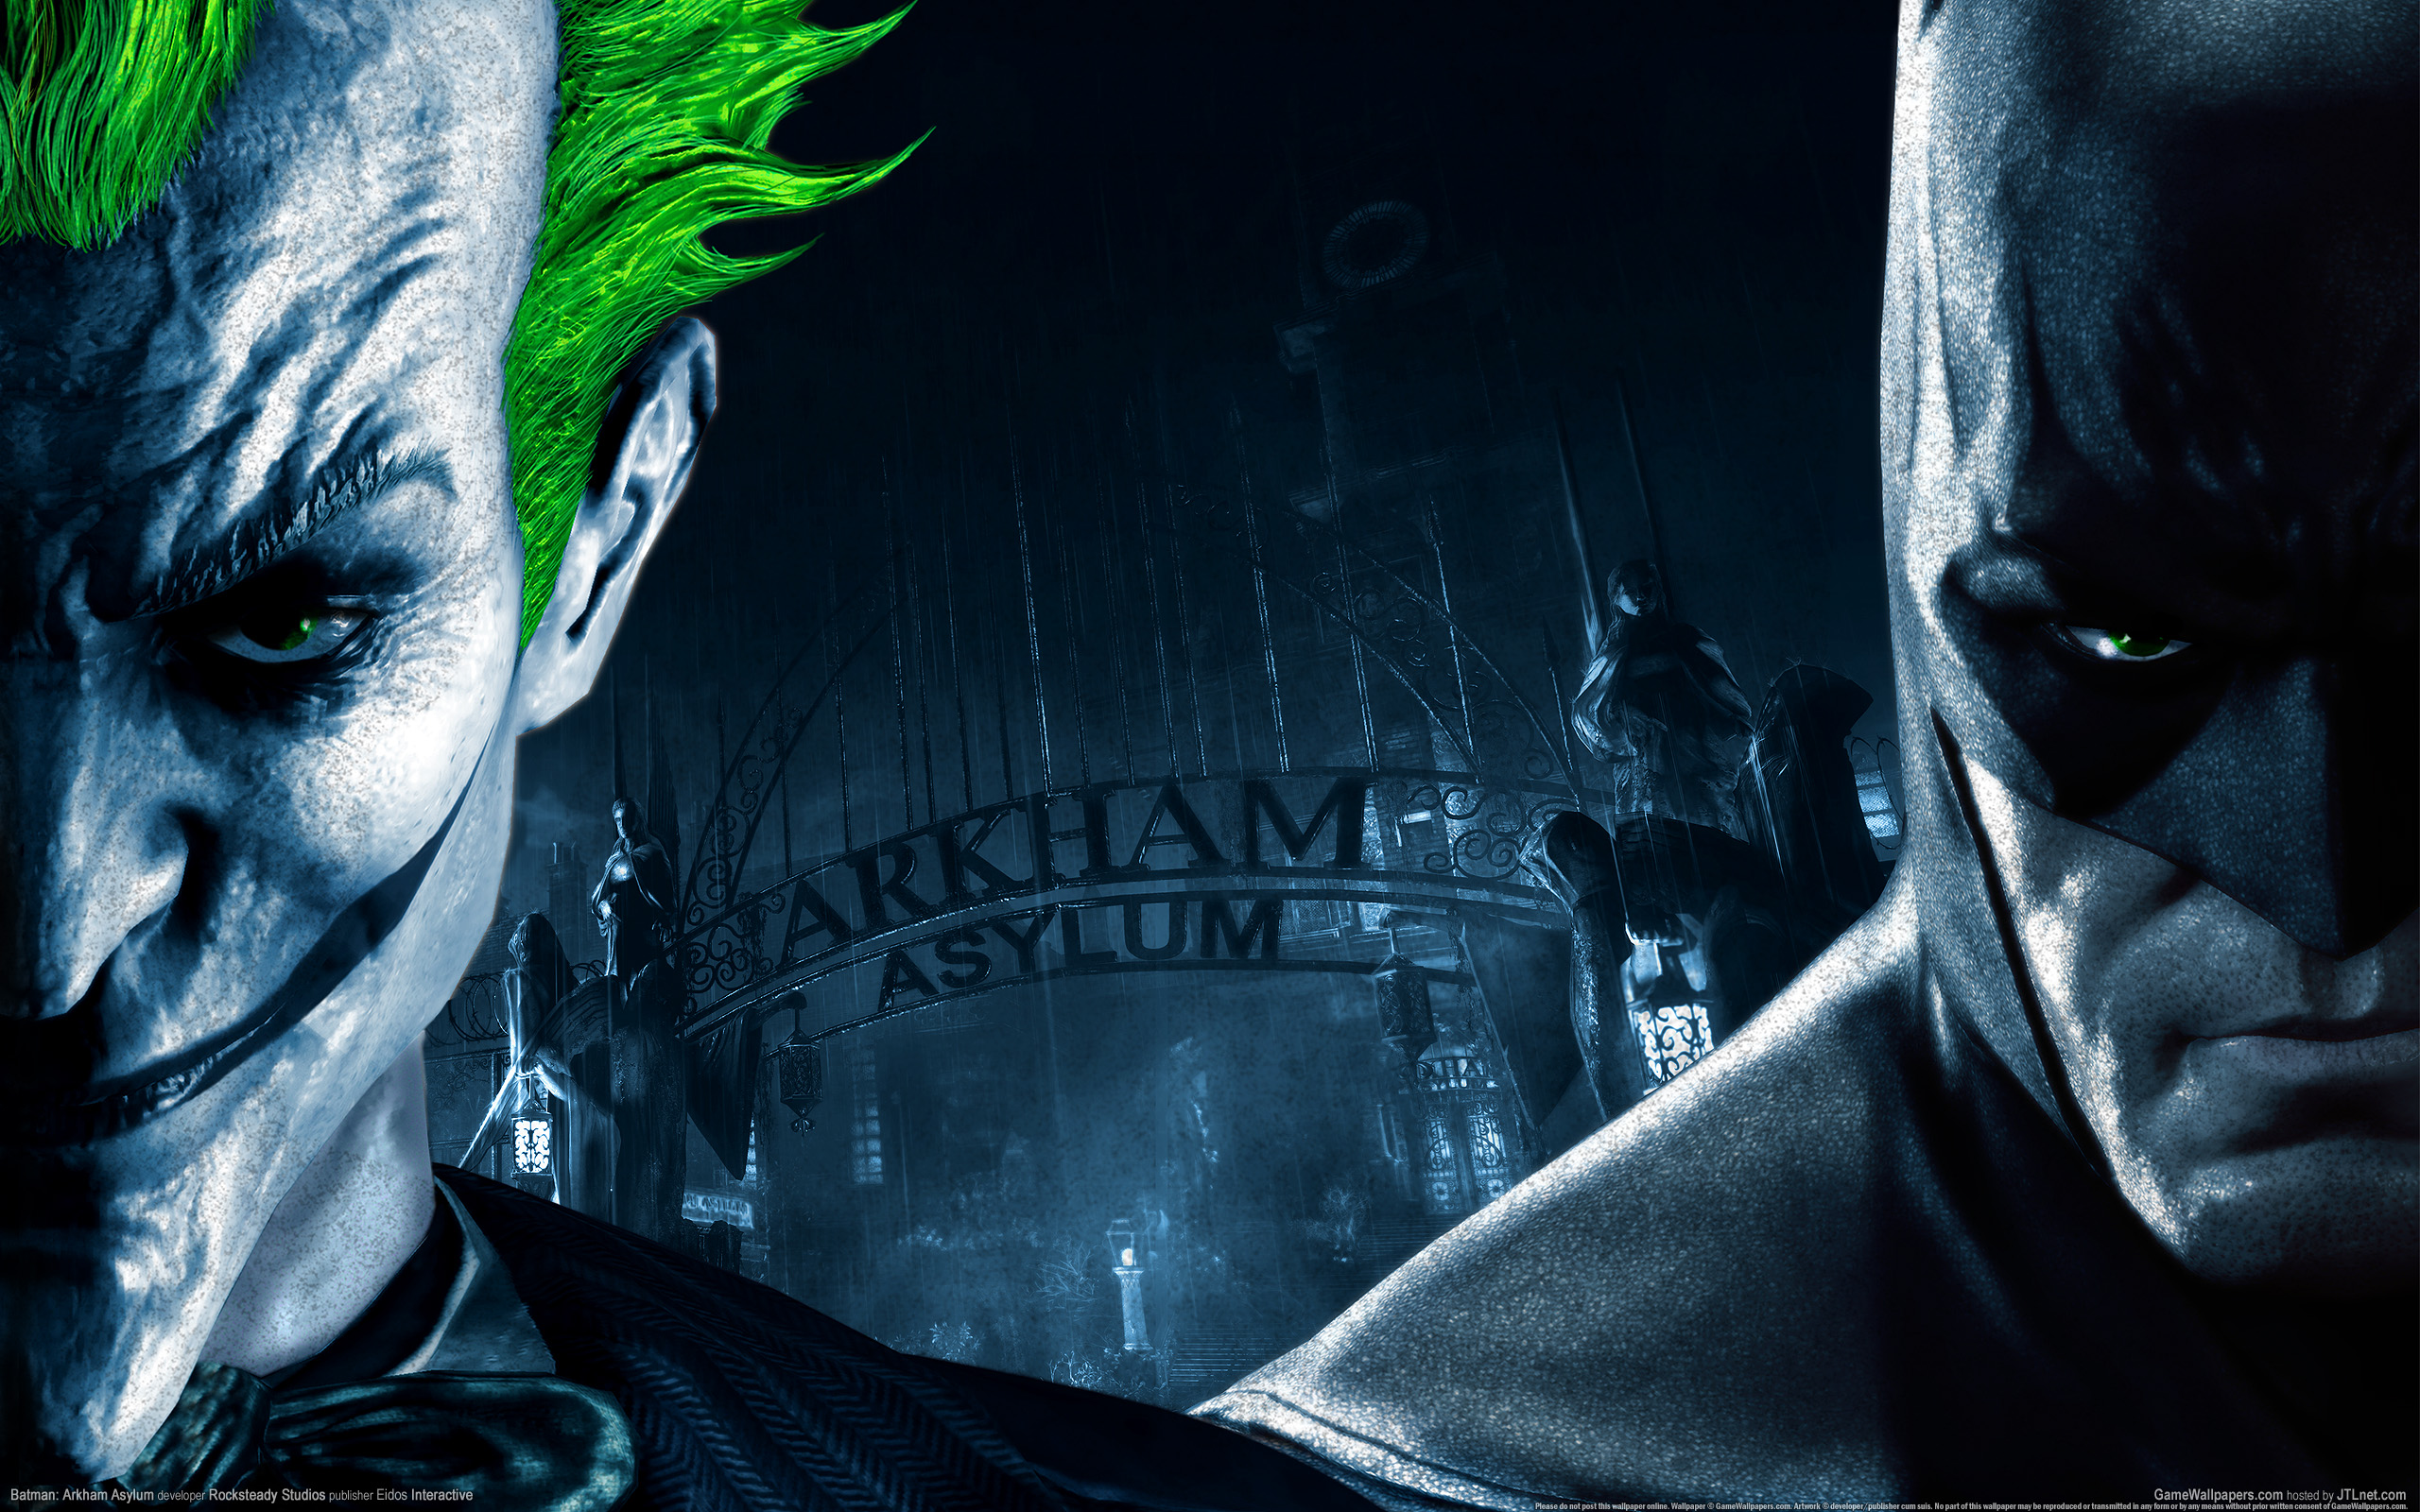 Joker And Batman Dc Comic Wallpapers